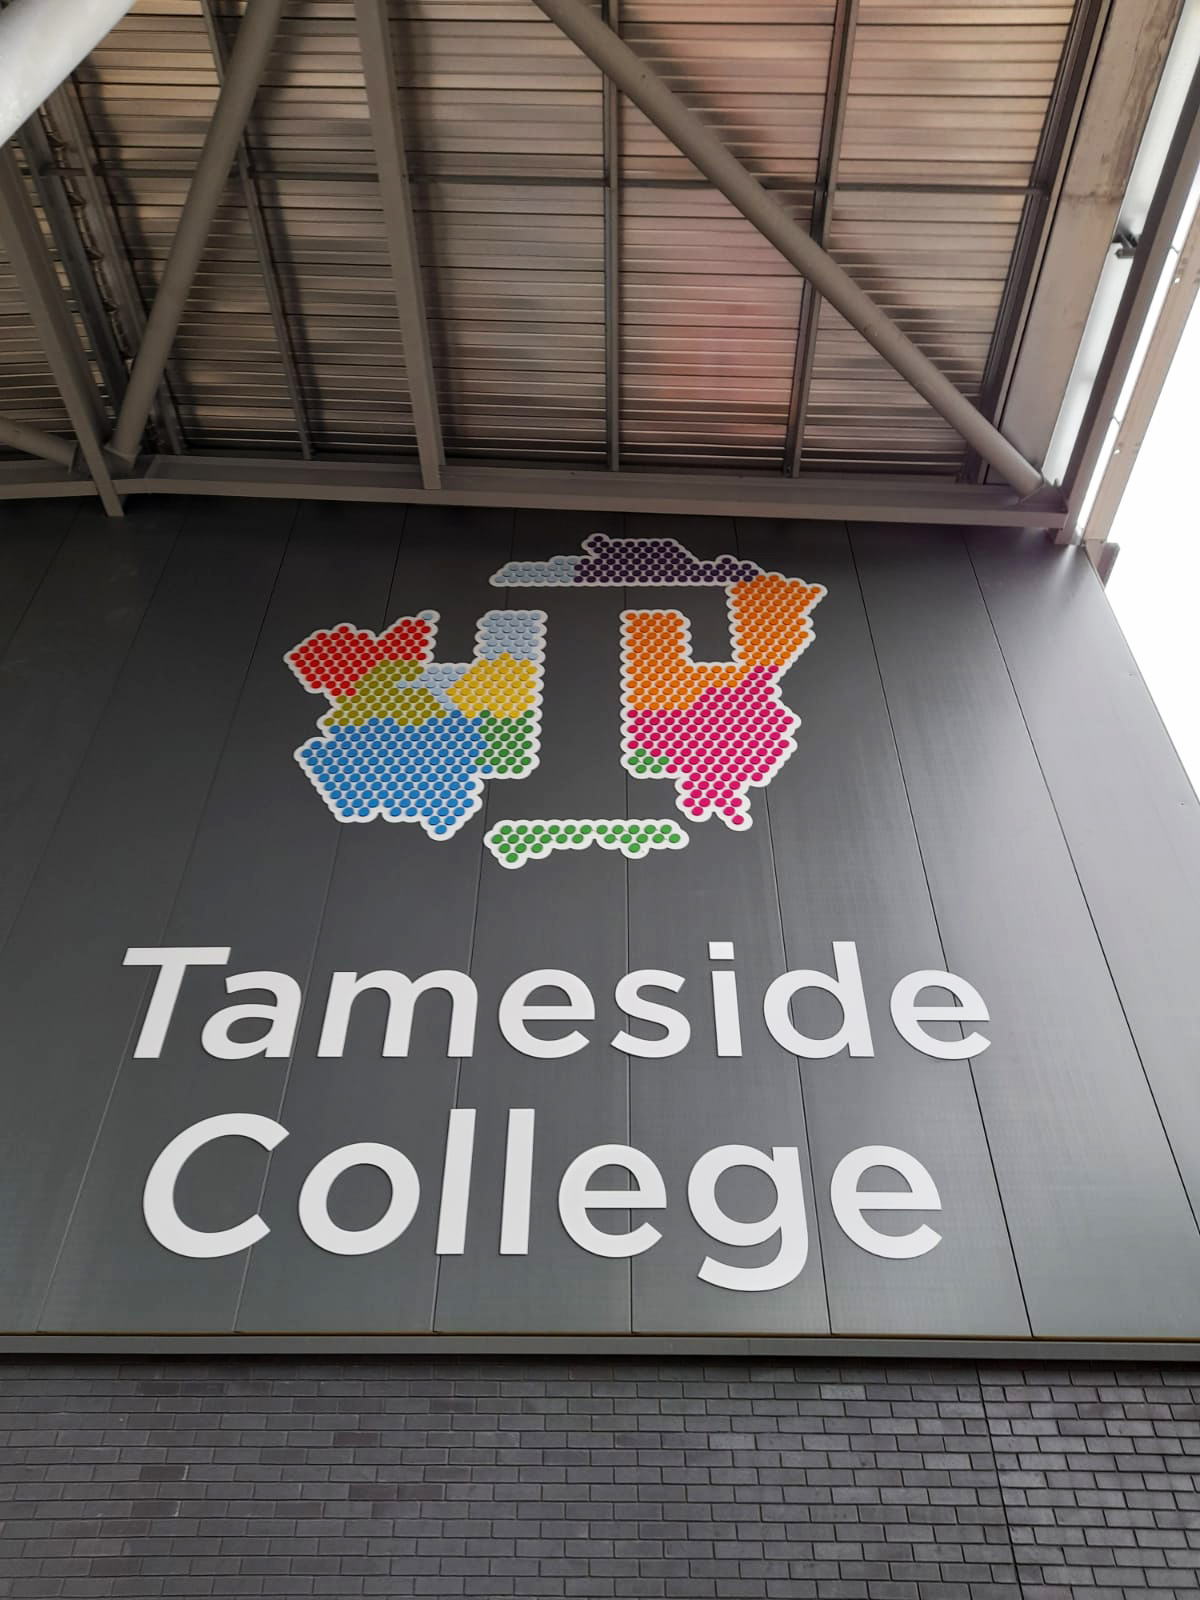 Tameside College signage